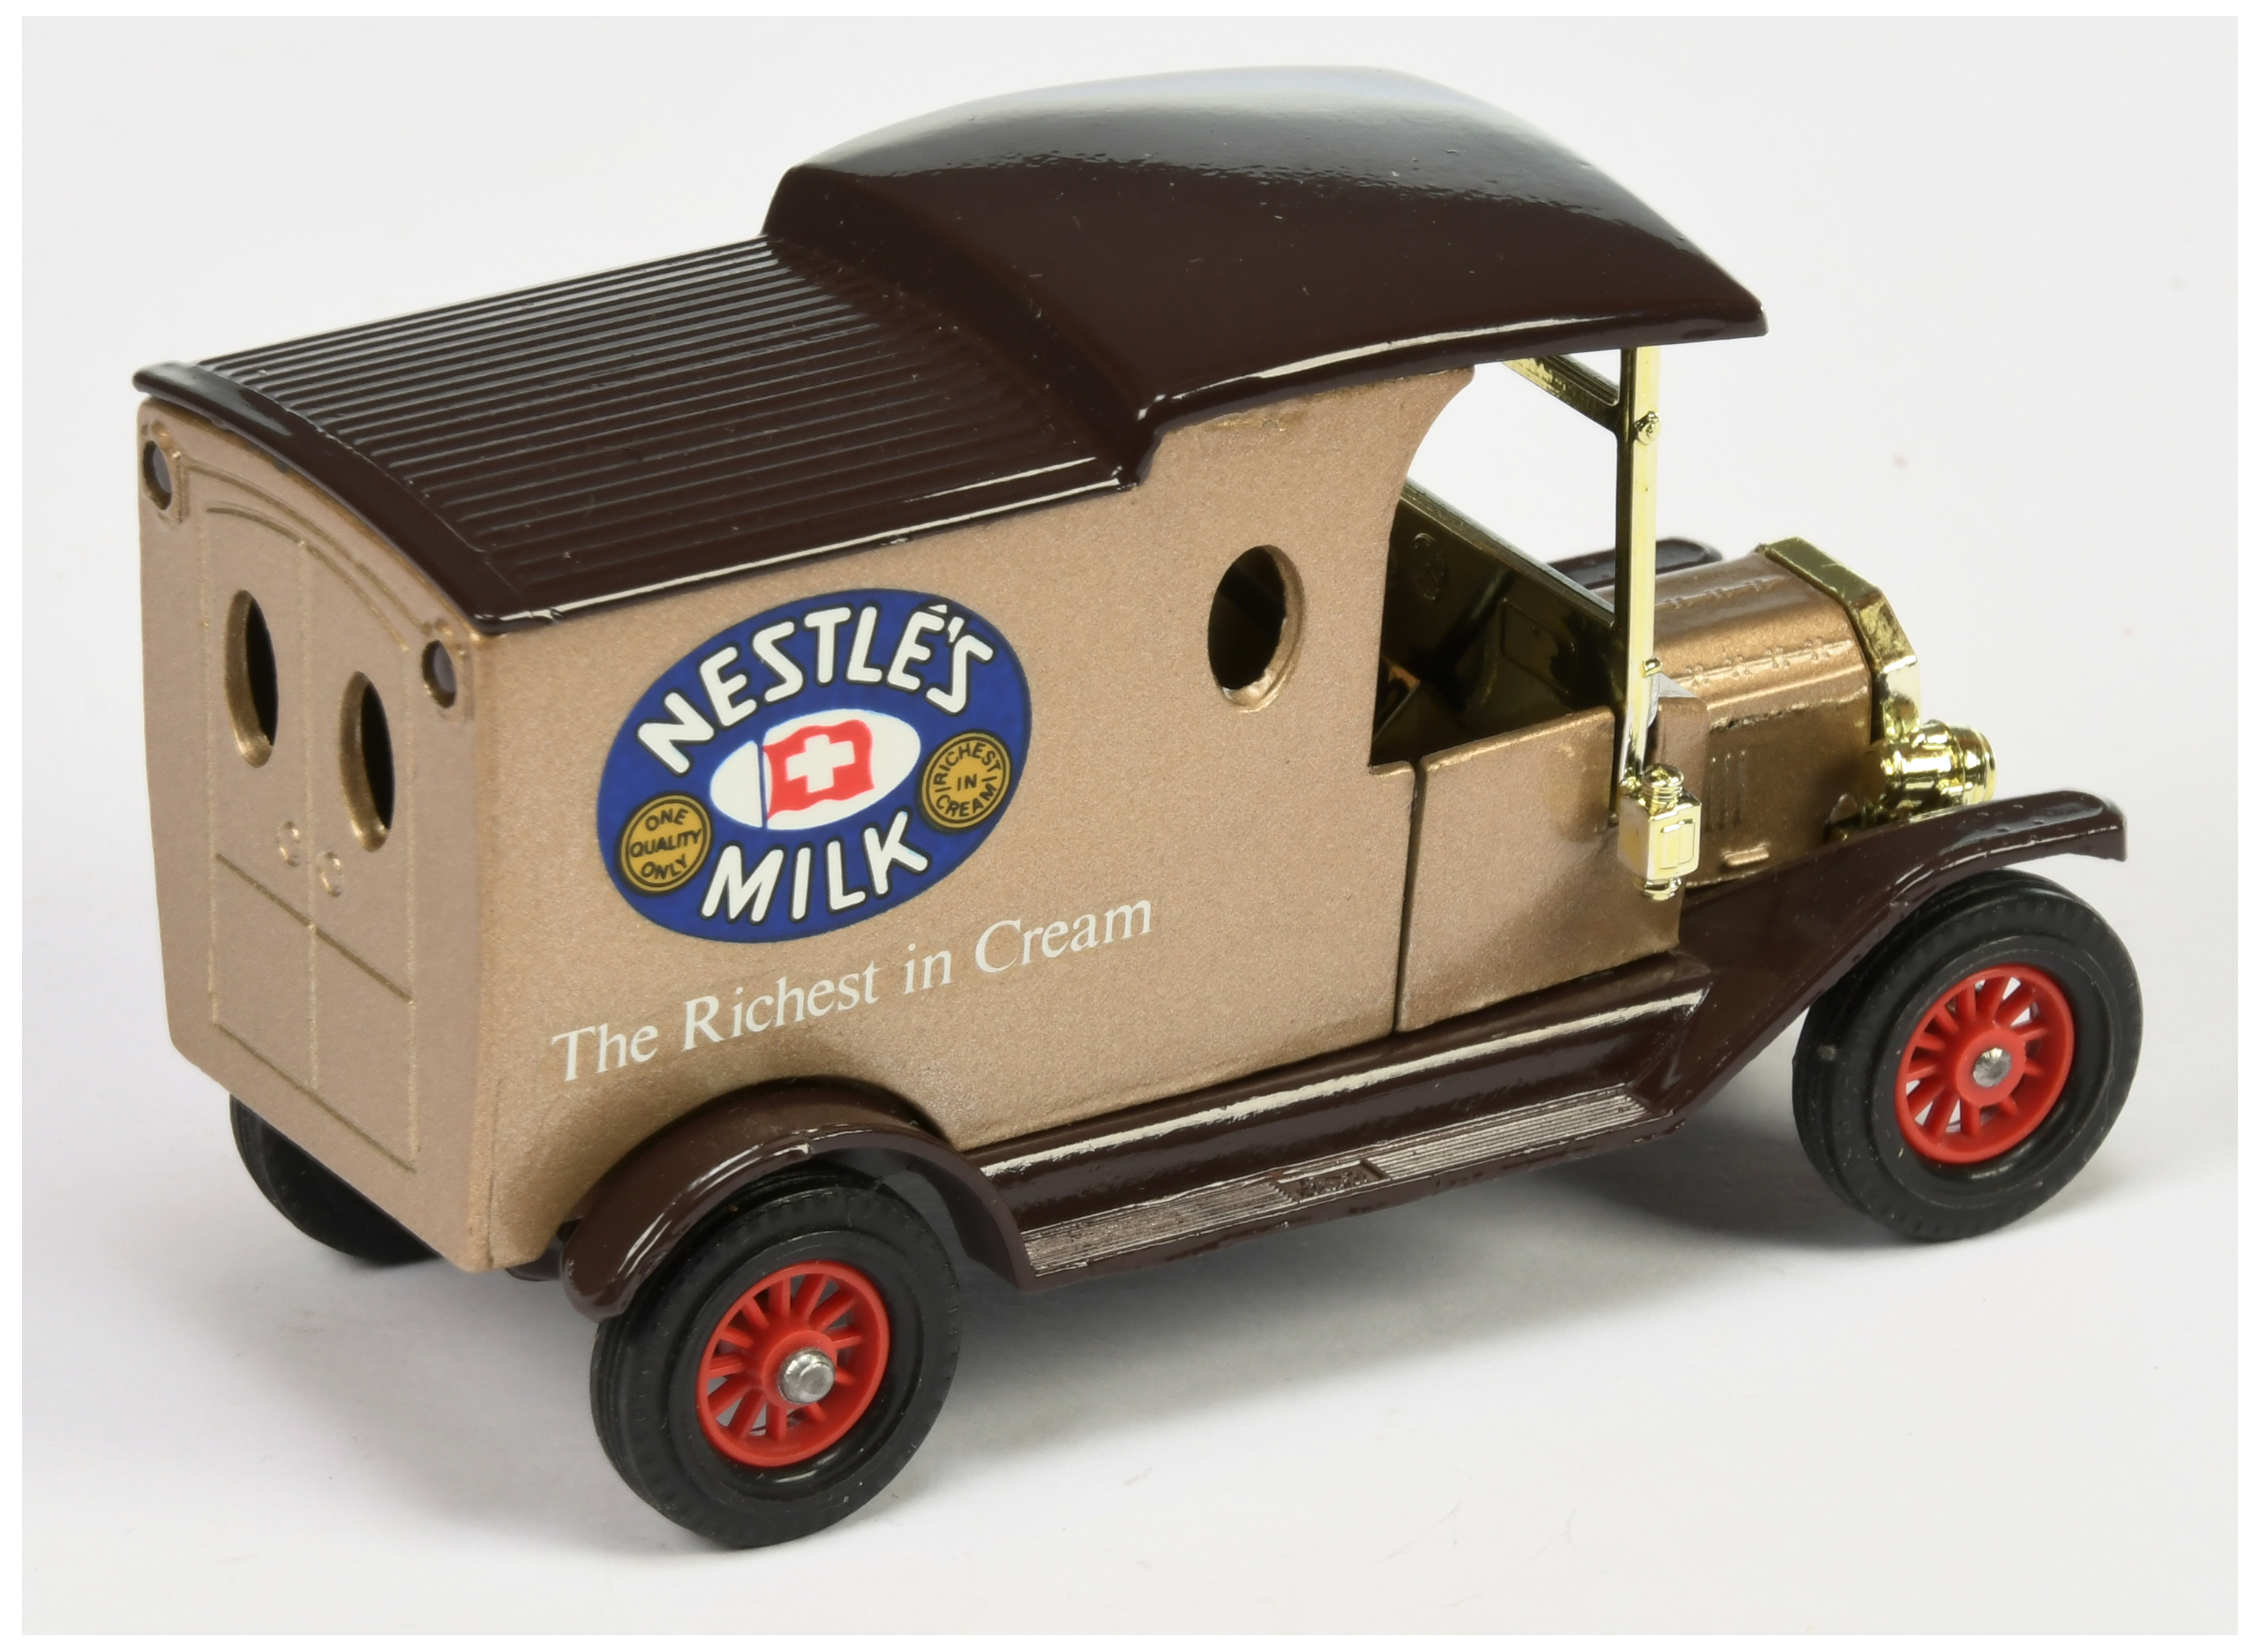 Matchbox Models of Yesteryear Y12 Ford Model T Van - "Nestles Milk" colour trial - gold body, dar... - Image 2 of 2